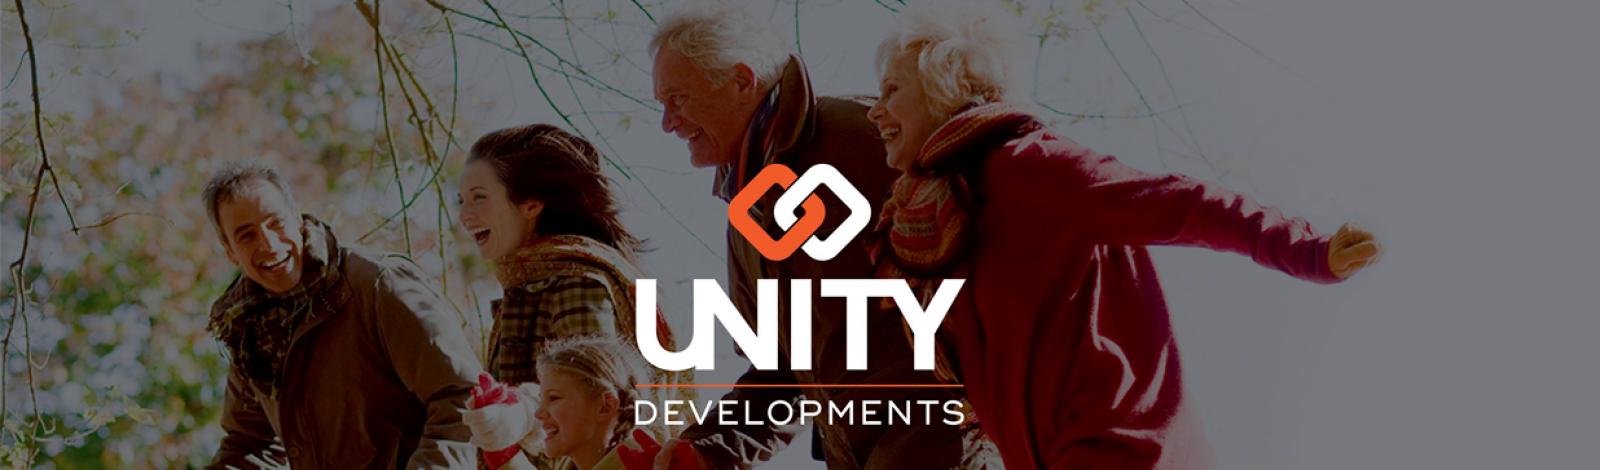 Unity developments banner